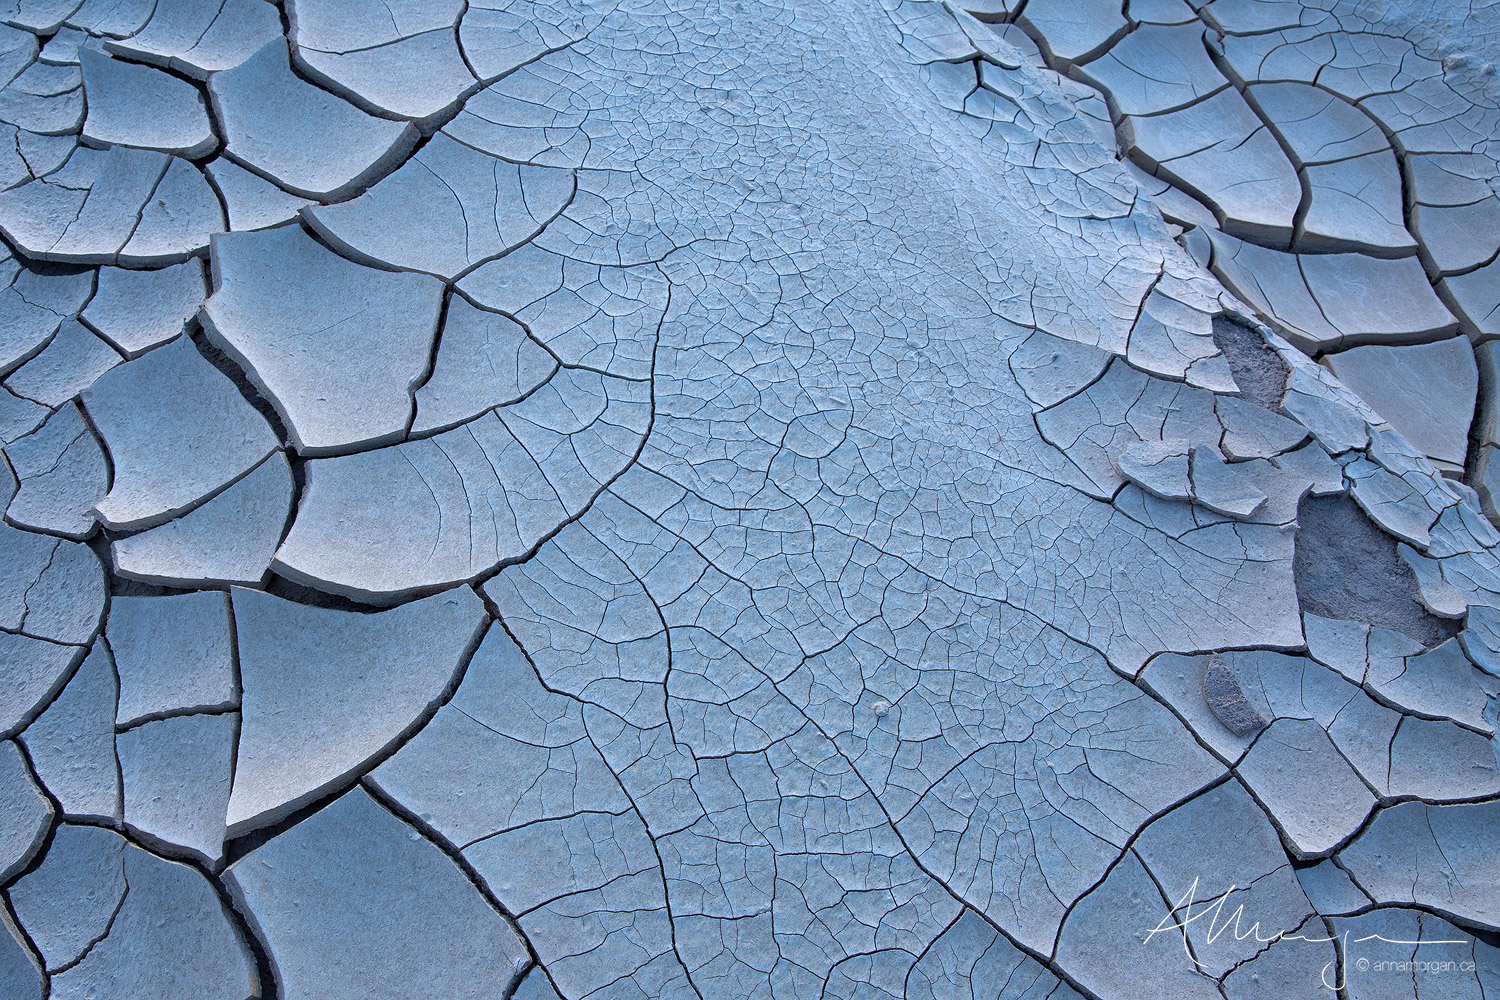 Mud tiles crack and peel away in a Death Valley playa